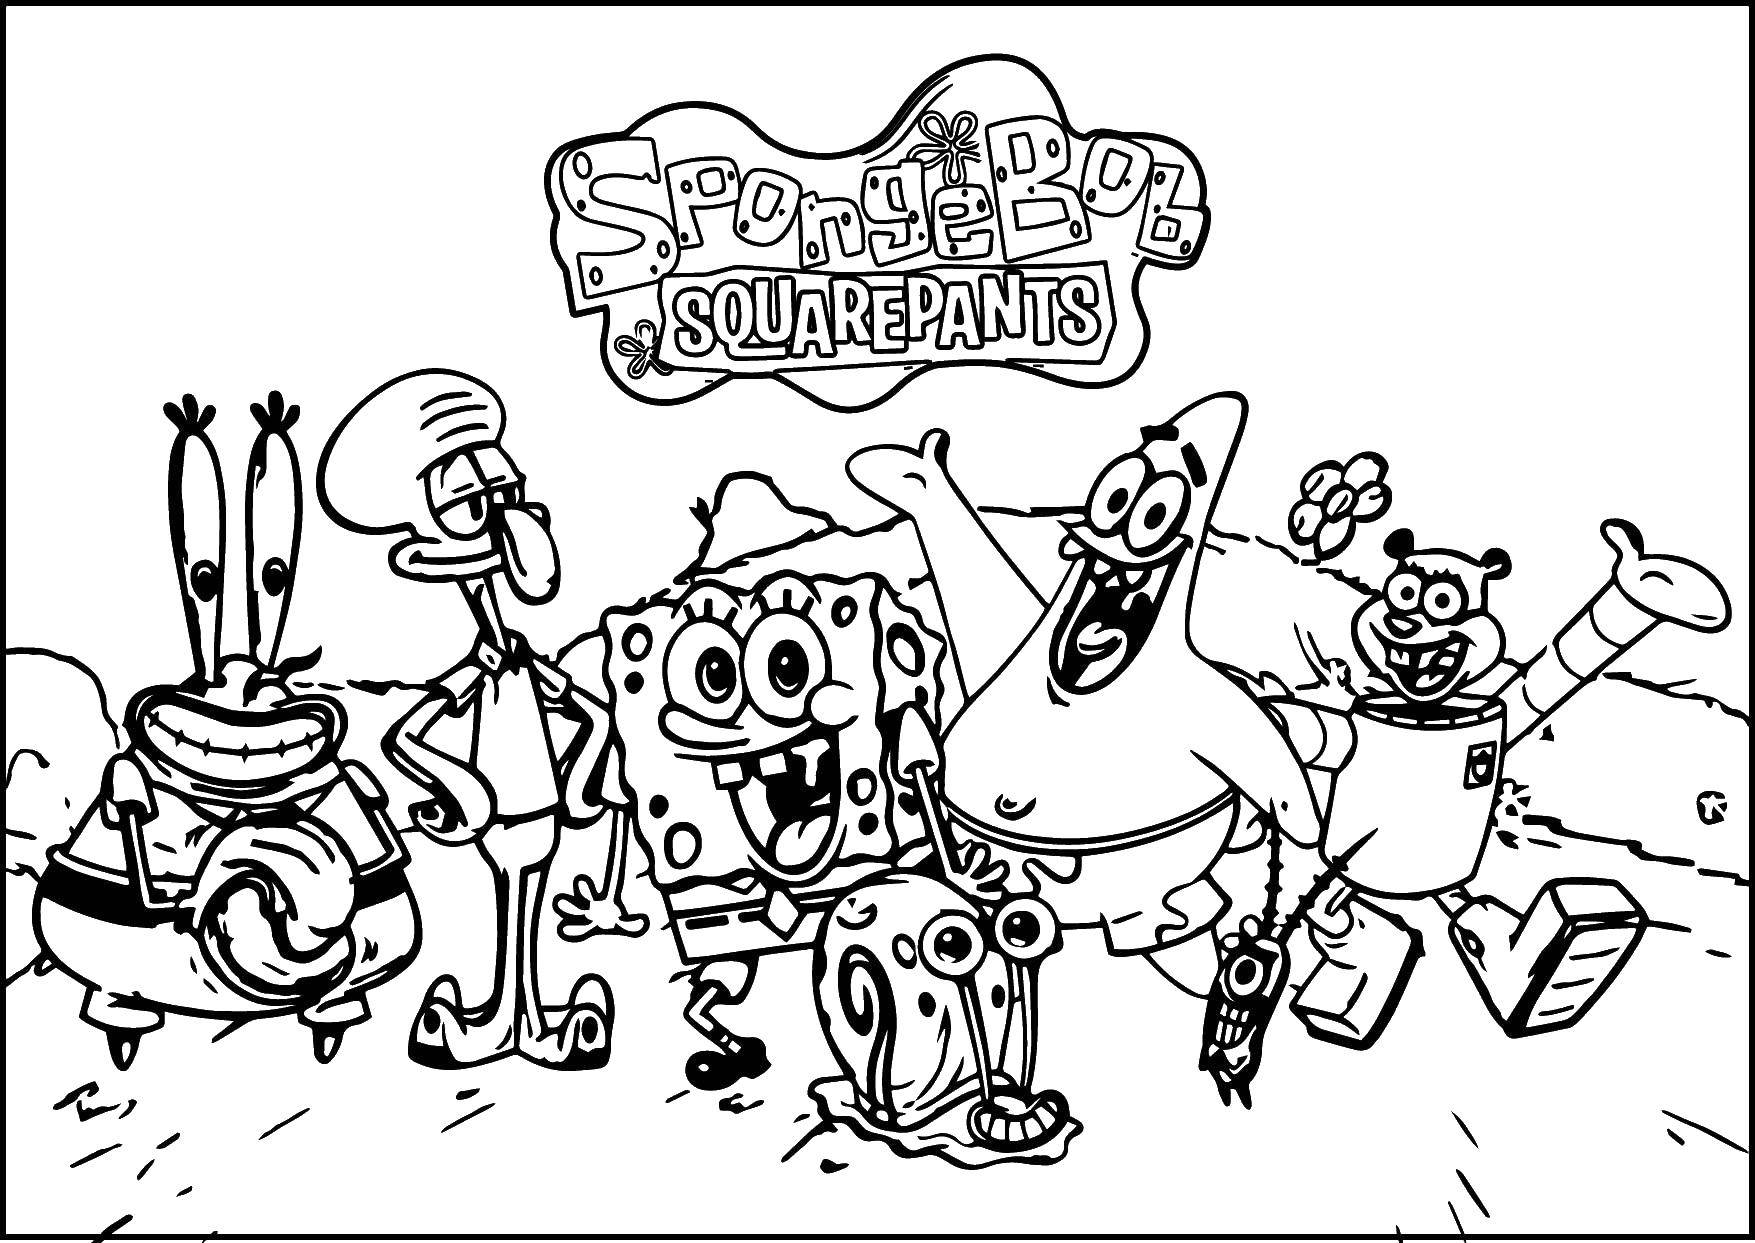 Coloring The characters of spongebob. Category Spongebob. Tags:  Spongebob cartoons, heroes.